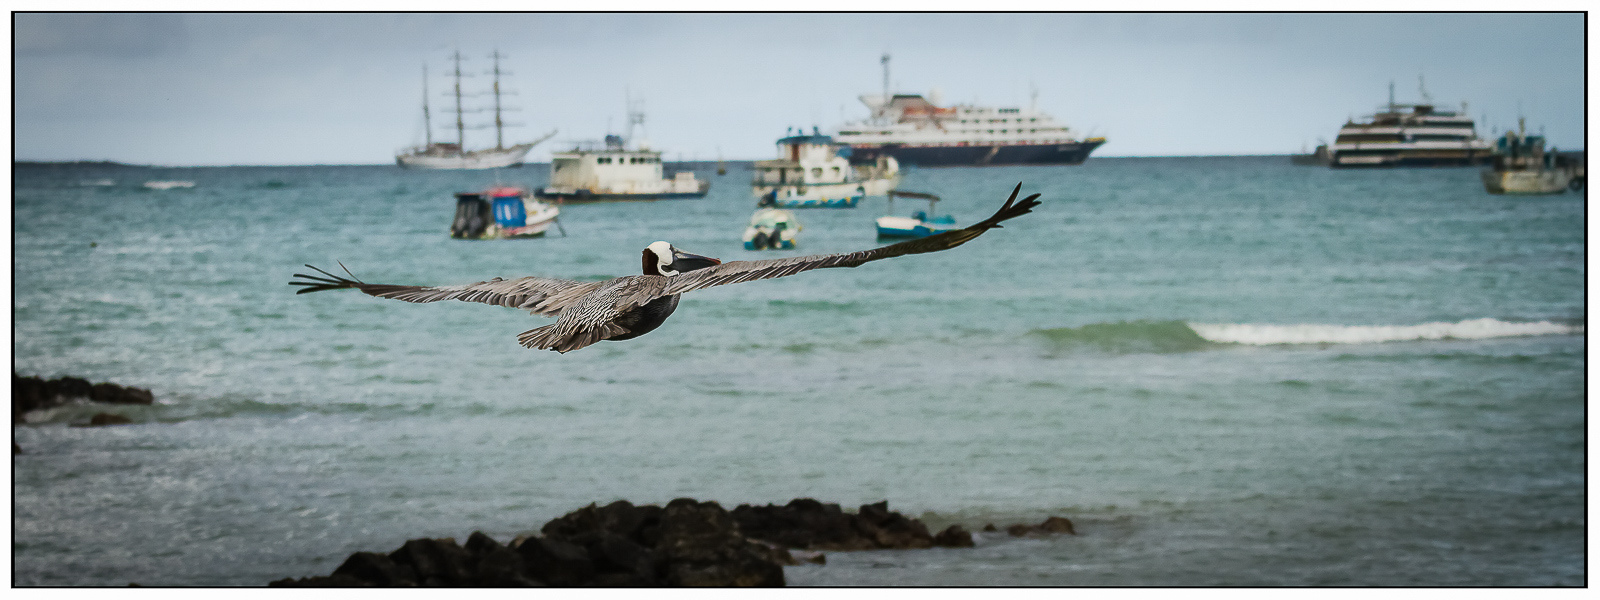 Pelican soaring over Santa Cruz, David Ireland